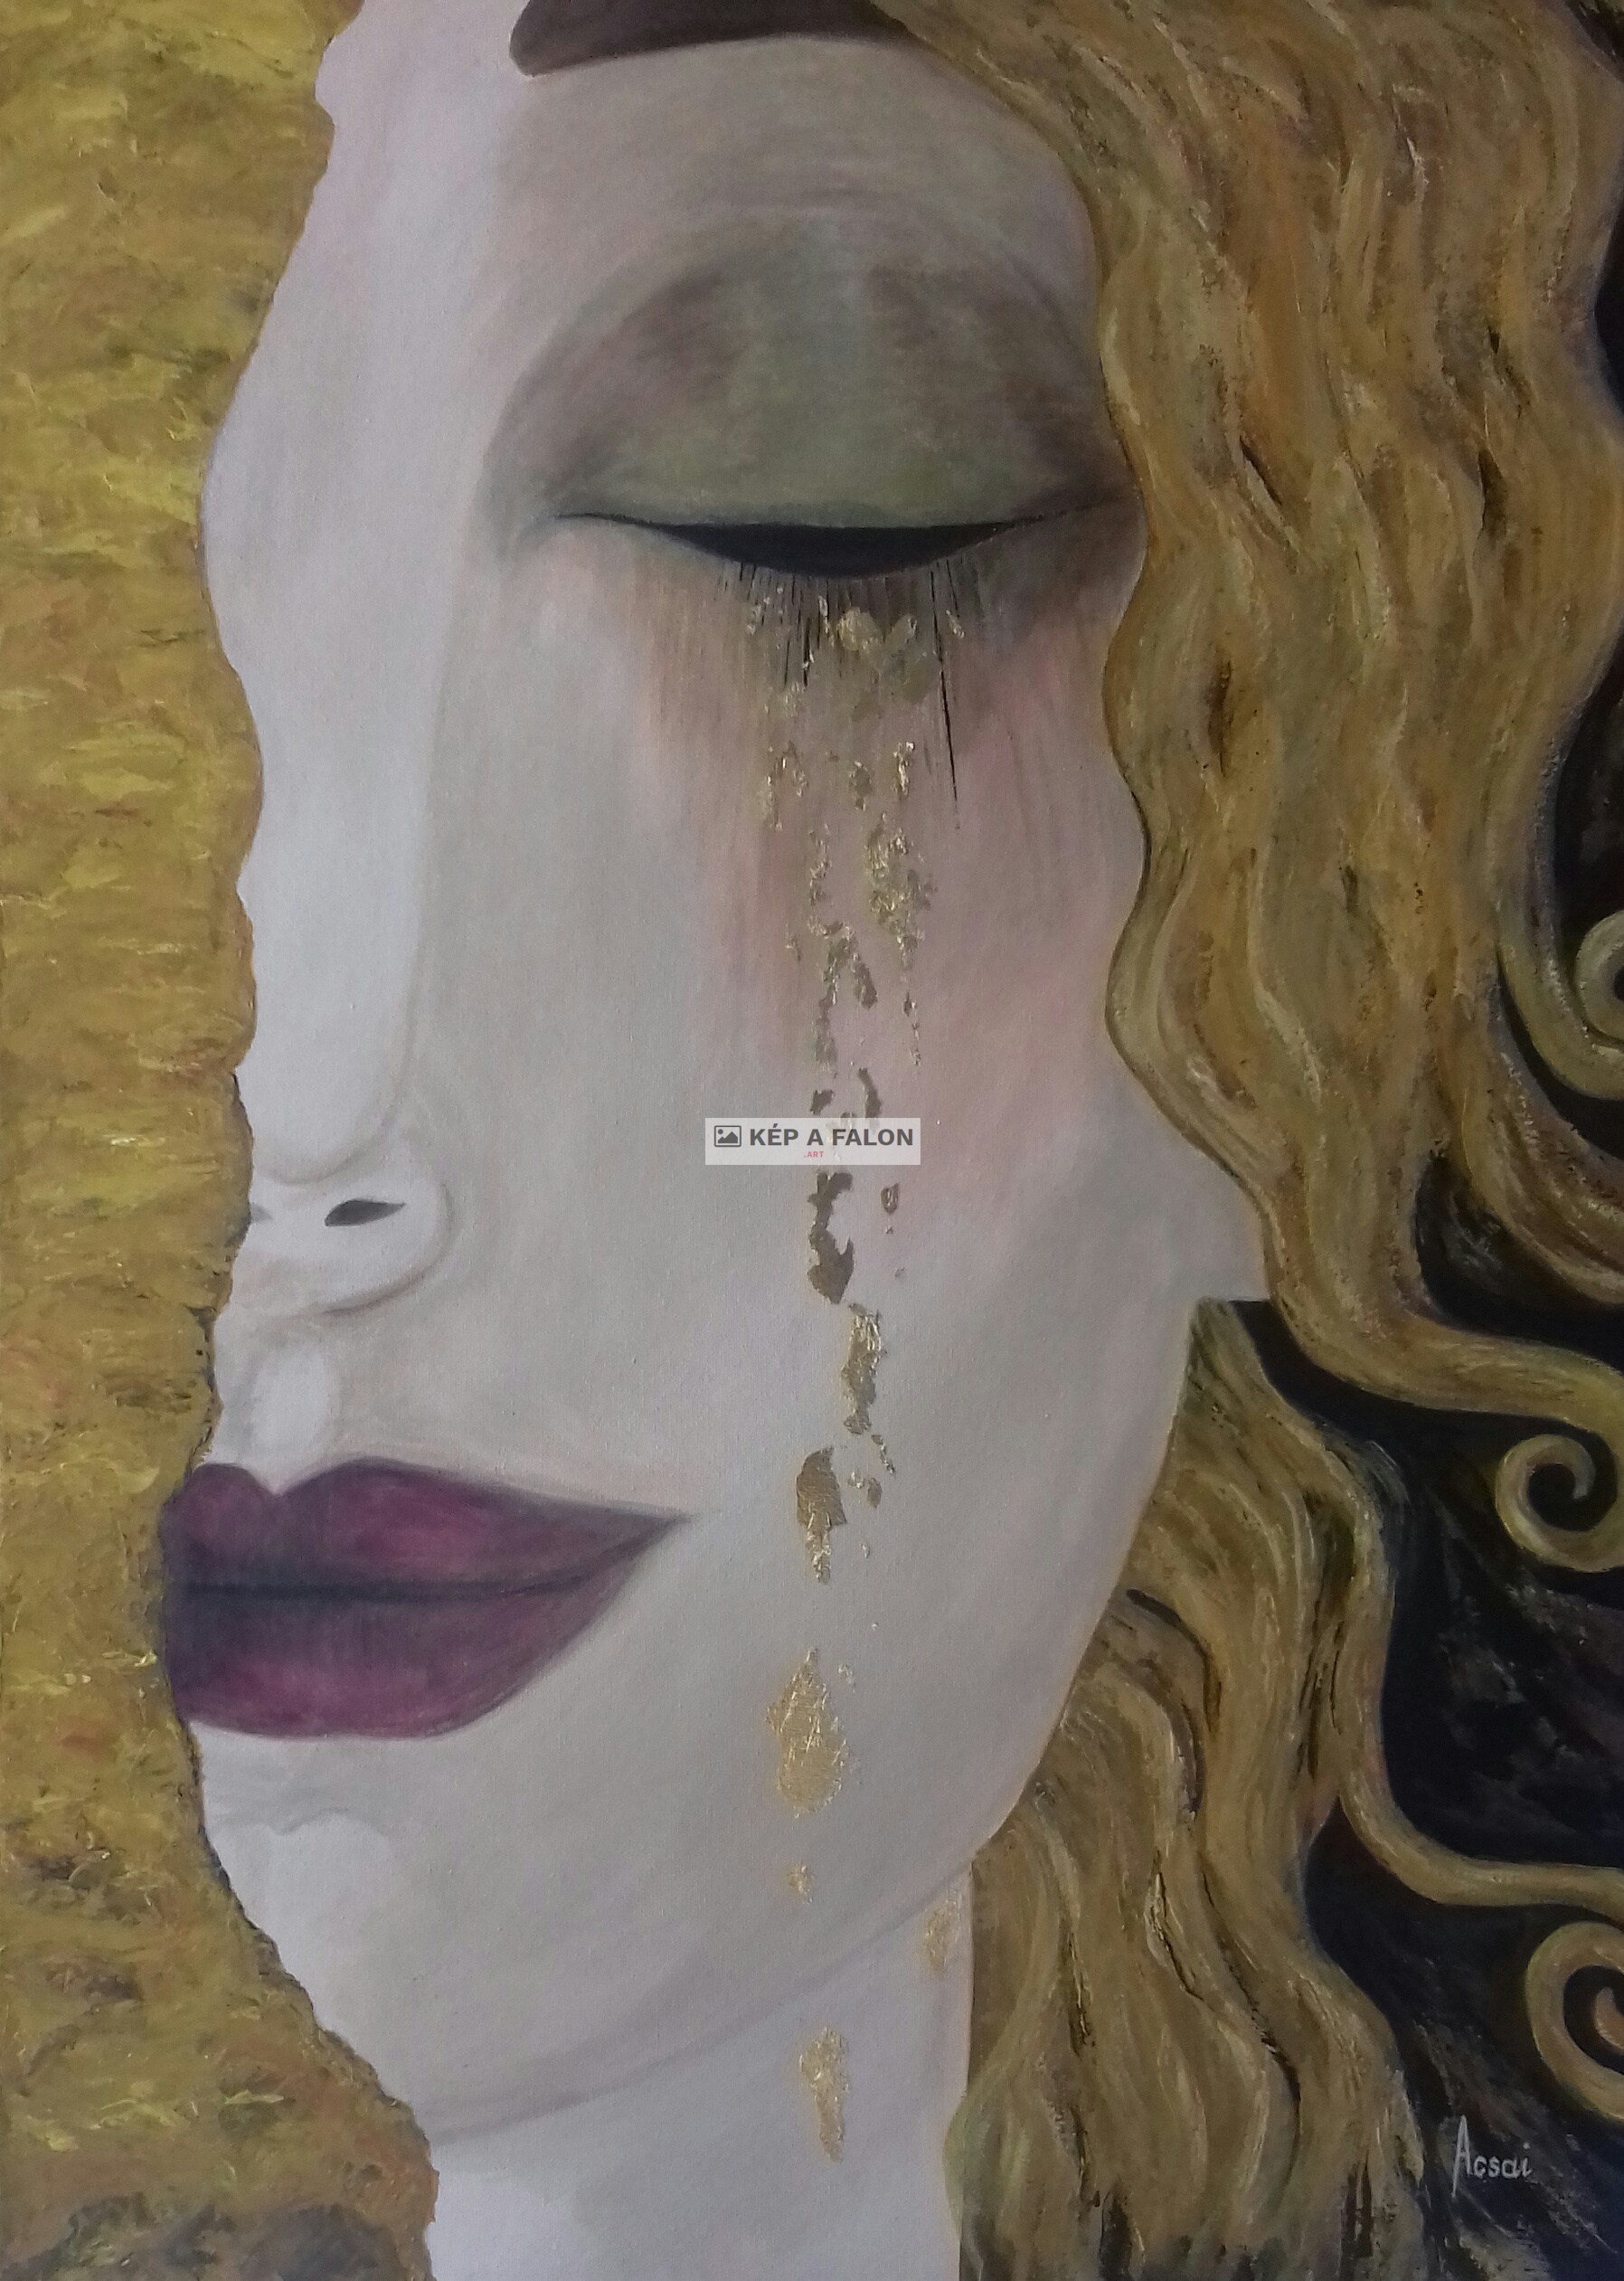 Arany könnyek (Anne-Marie Zilberman nyomán) by: Acsai Anna | 2020.év, akril festmény